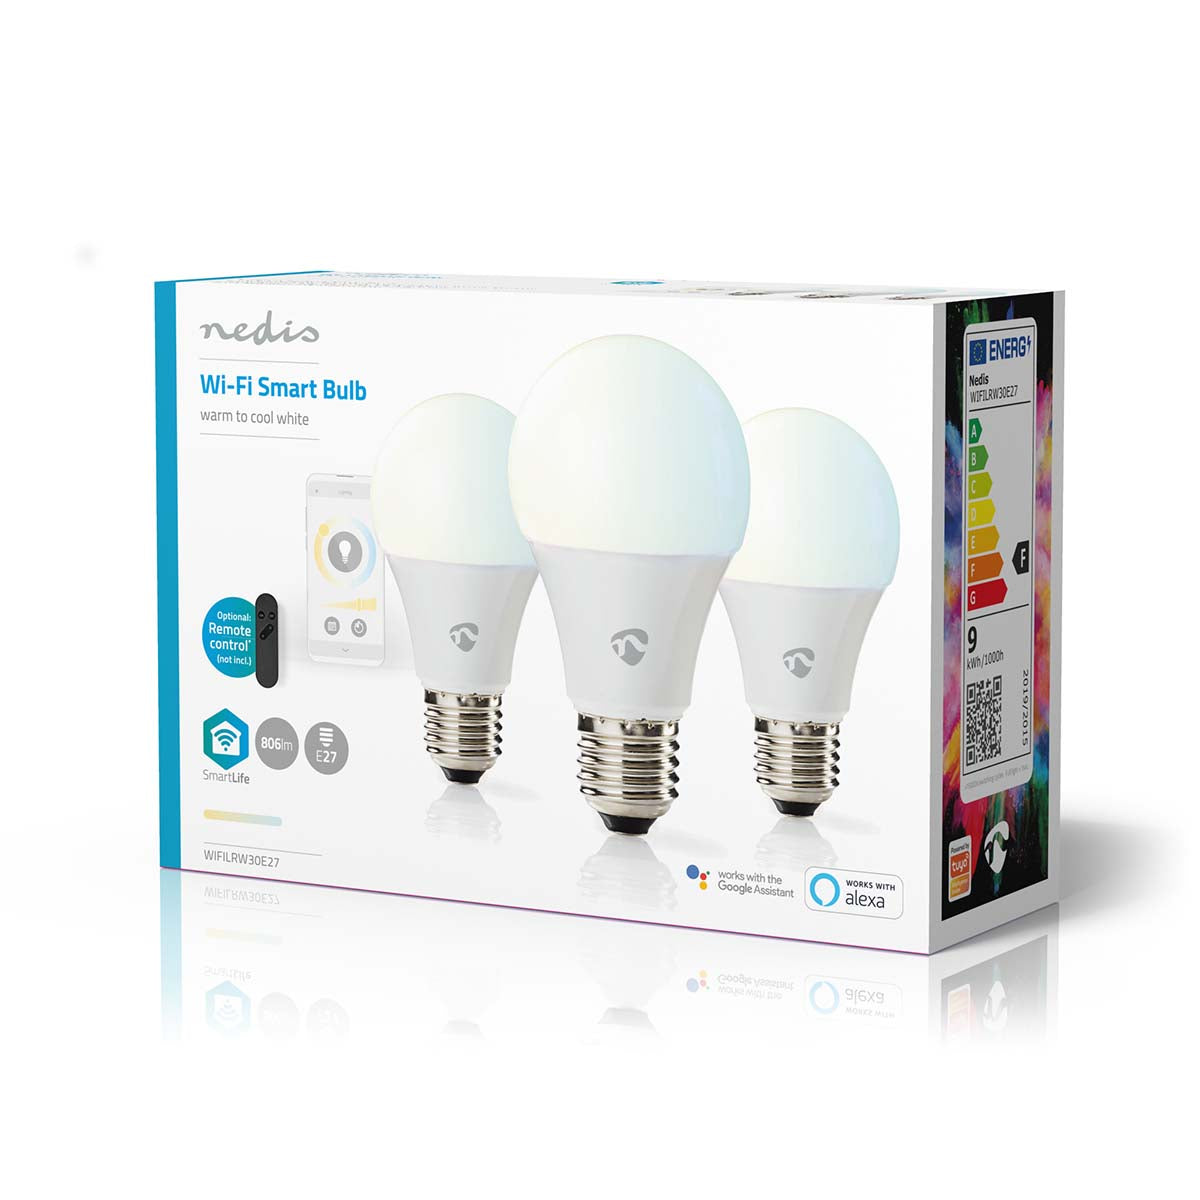 Lâmpada LED Branco Qt e Frio|Pack 3|Wi-Fi|E27|806 lm|9 W